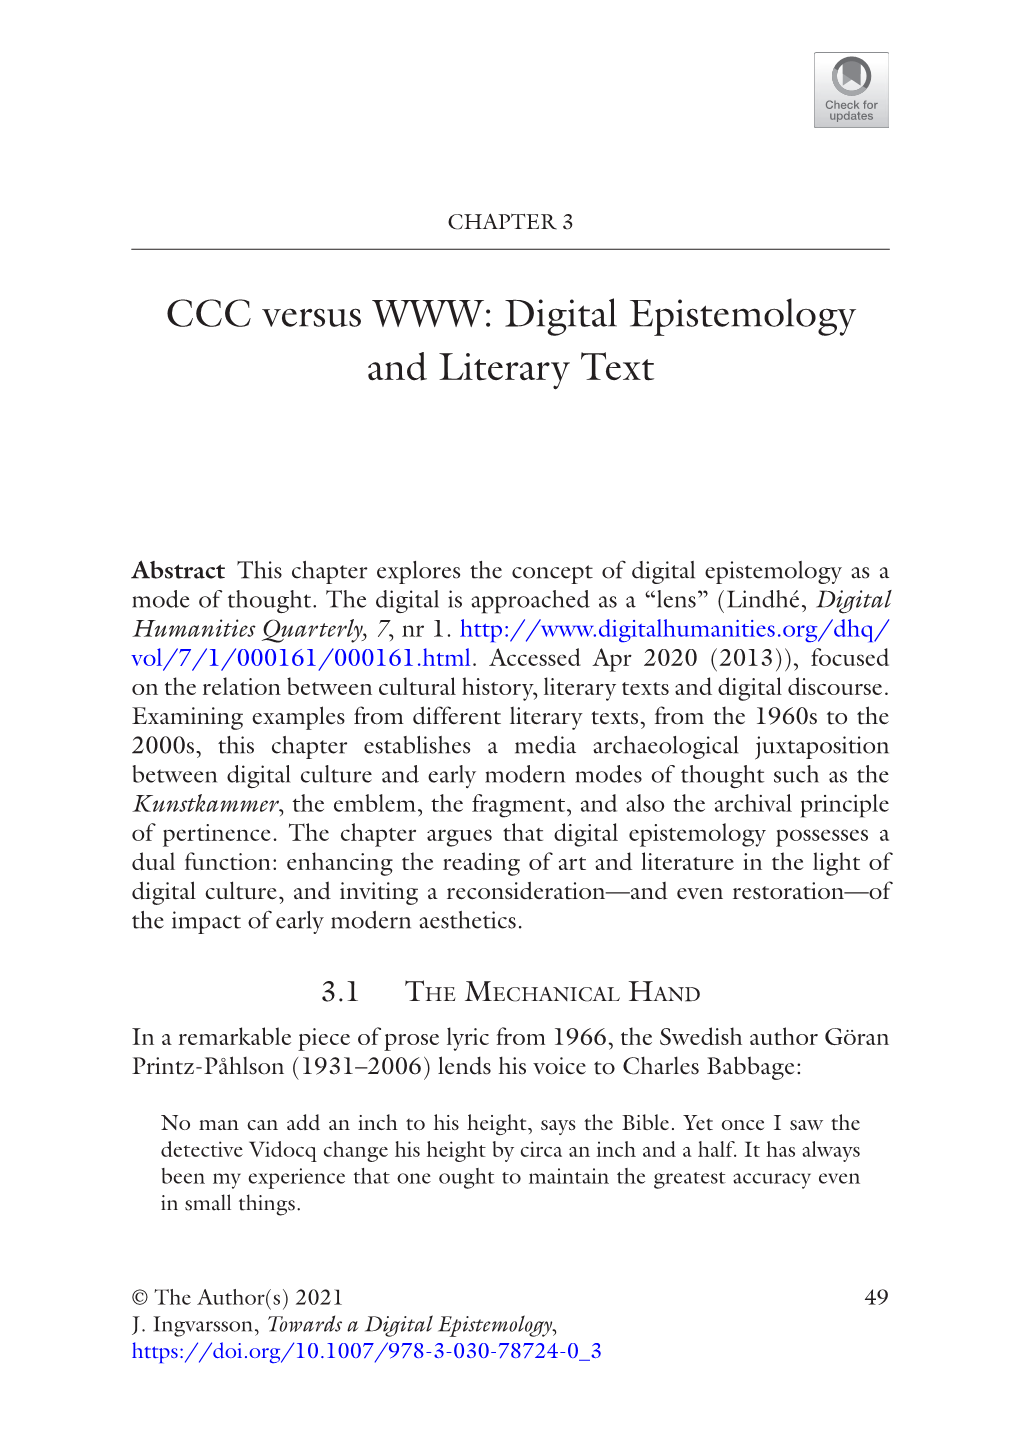 CCC Versus WWW: Digital Epistemology and Literary Text